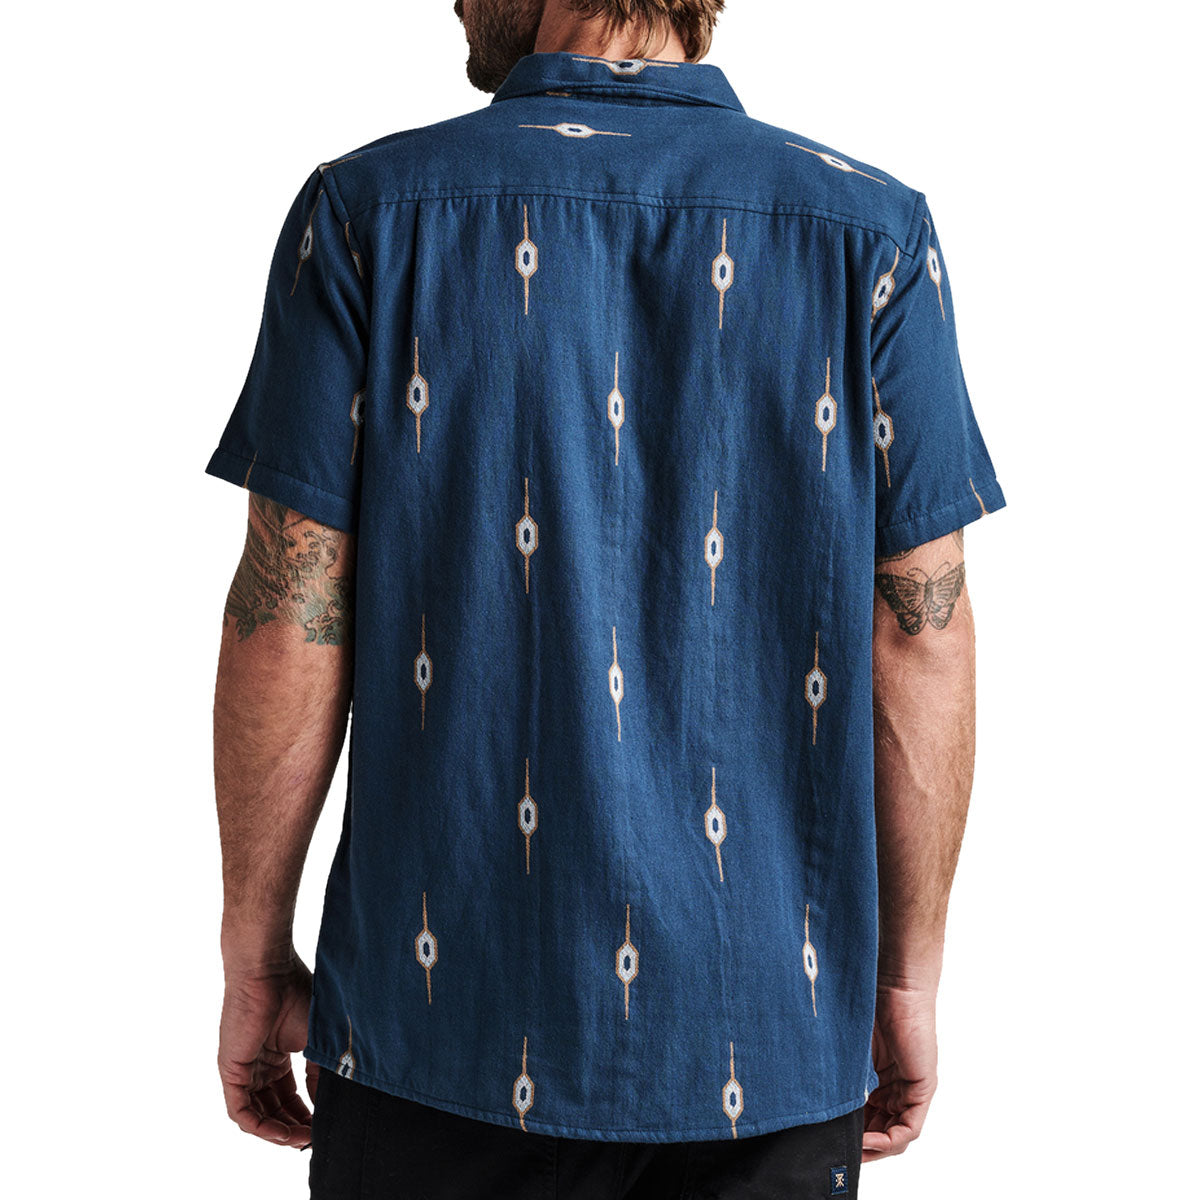 Roark Journey Woven Shirt - Castagno Nannai Blue image 2